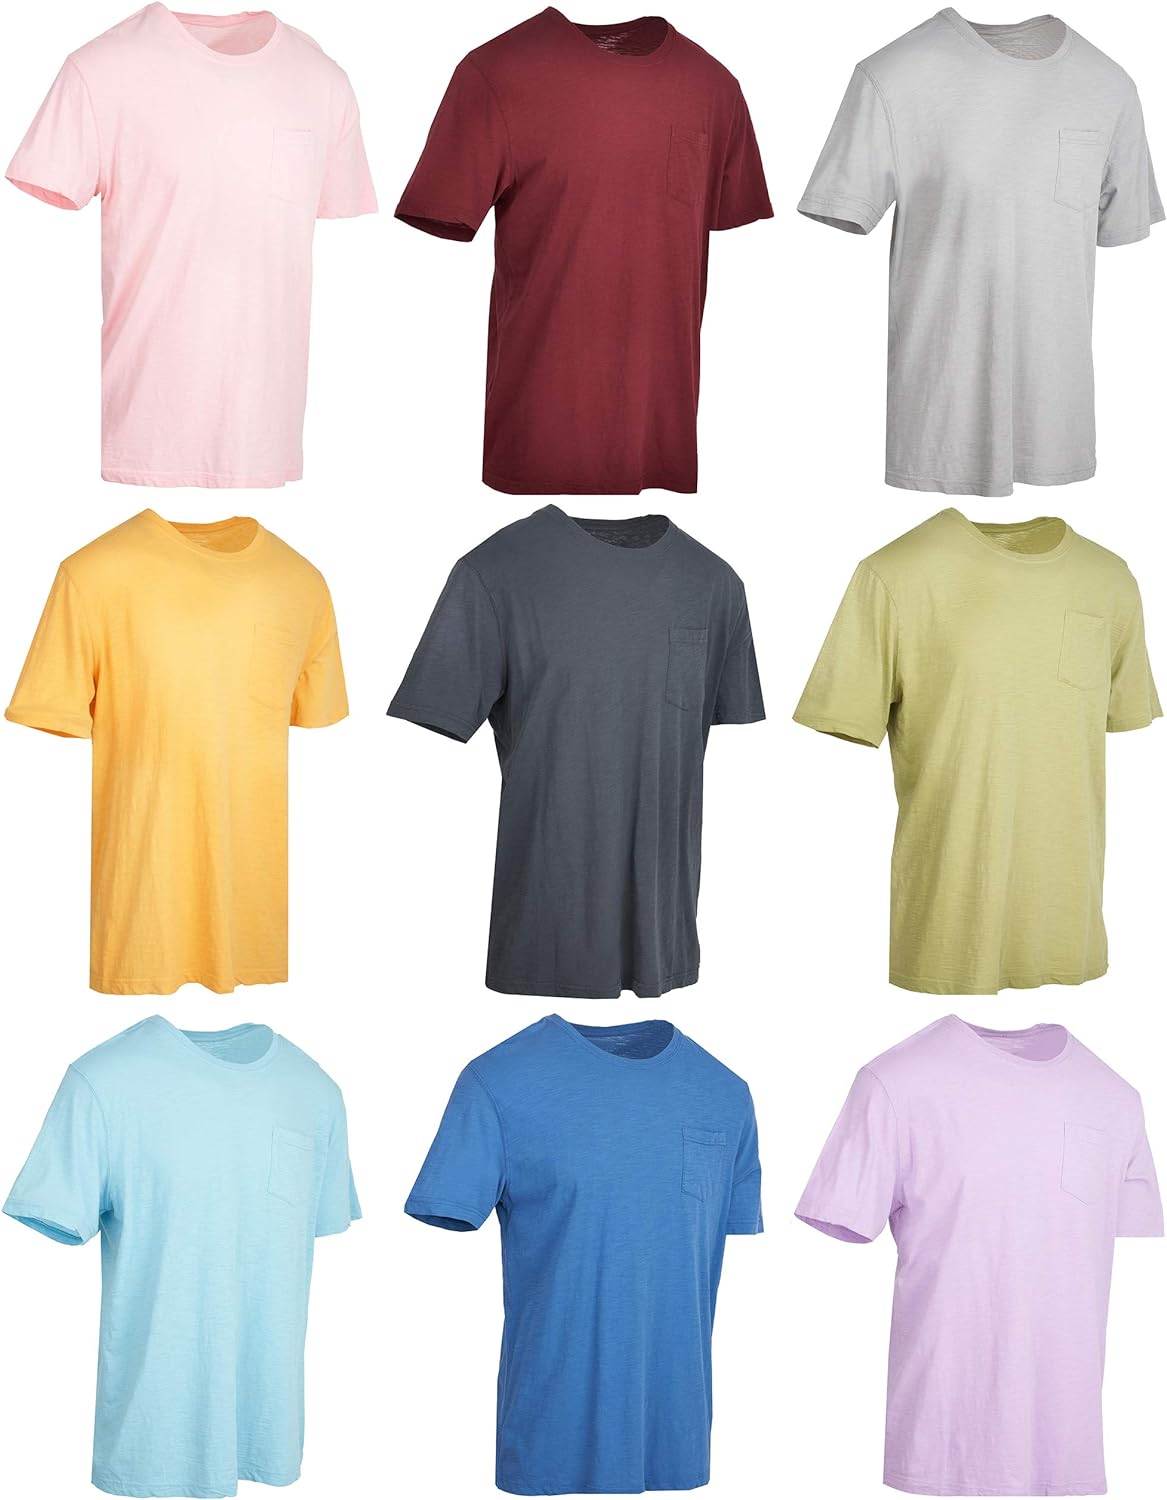 Yacht & Smith 9 Pack of Mens Cotton Slub Pocket Tees Tshirt, T-shirts in bulk Wholesale, Colorful Packs (Small)